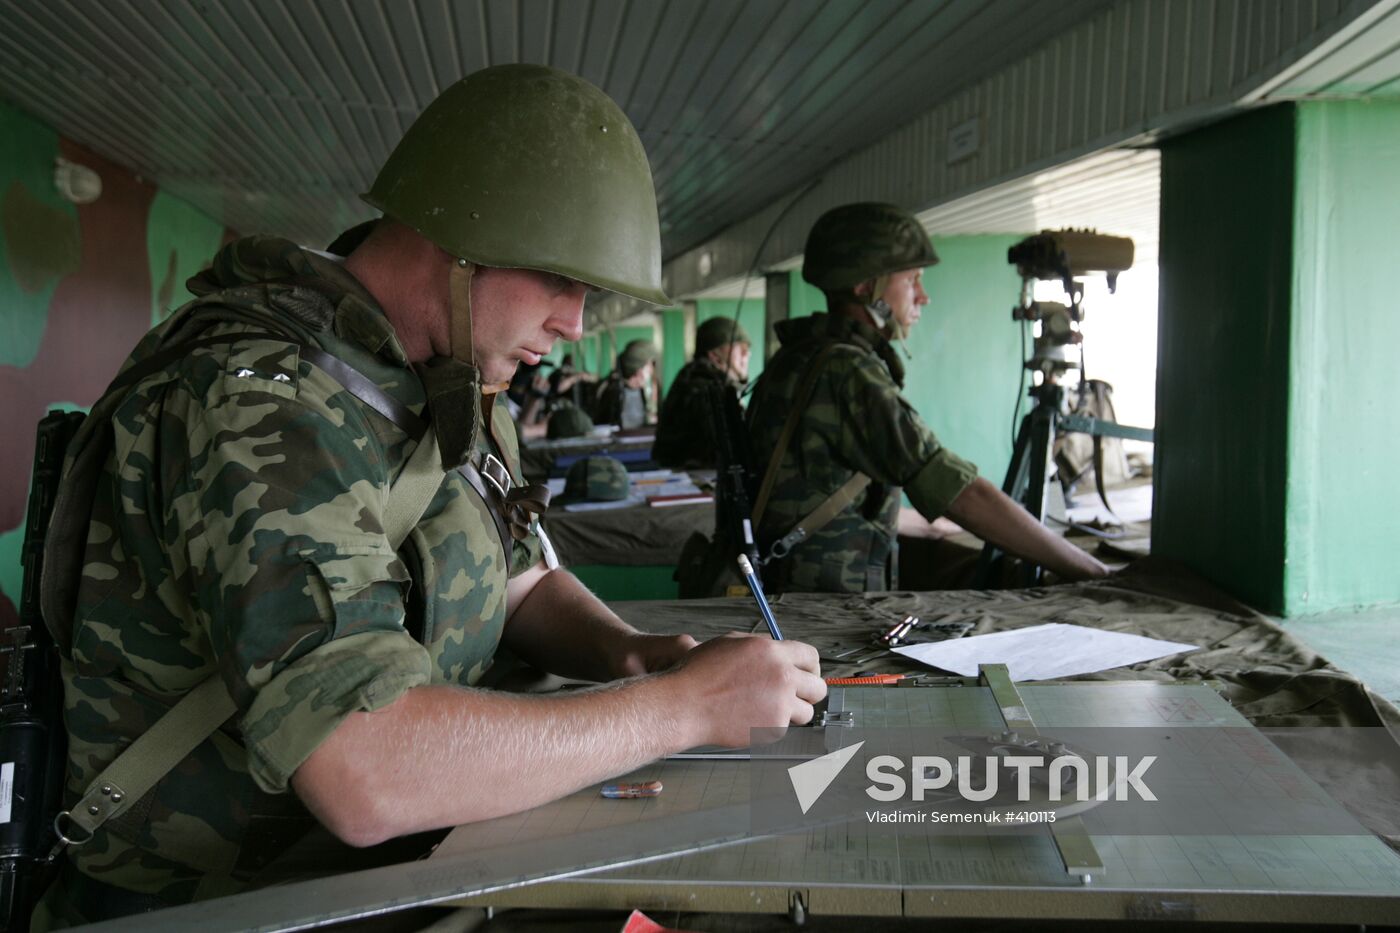 Caucasus-2009 military drills nearing end in Stavropol Region